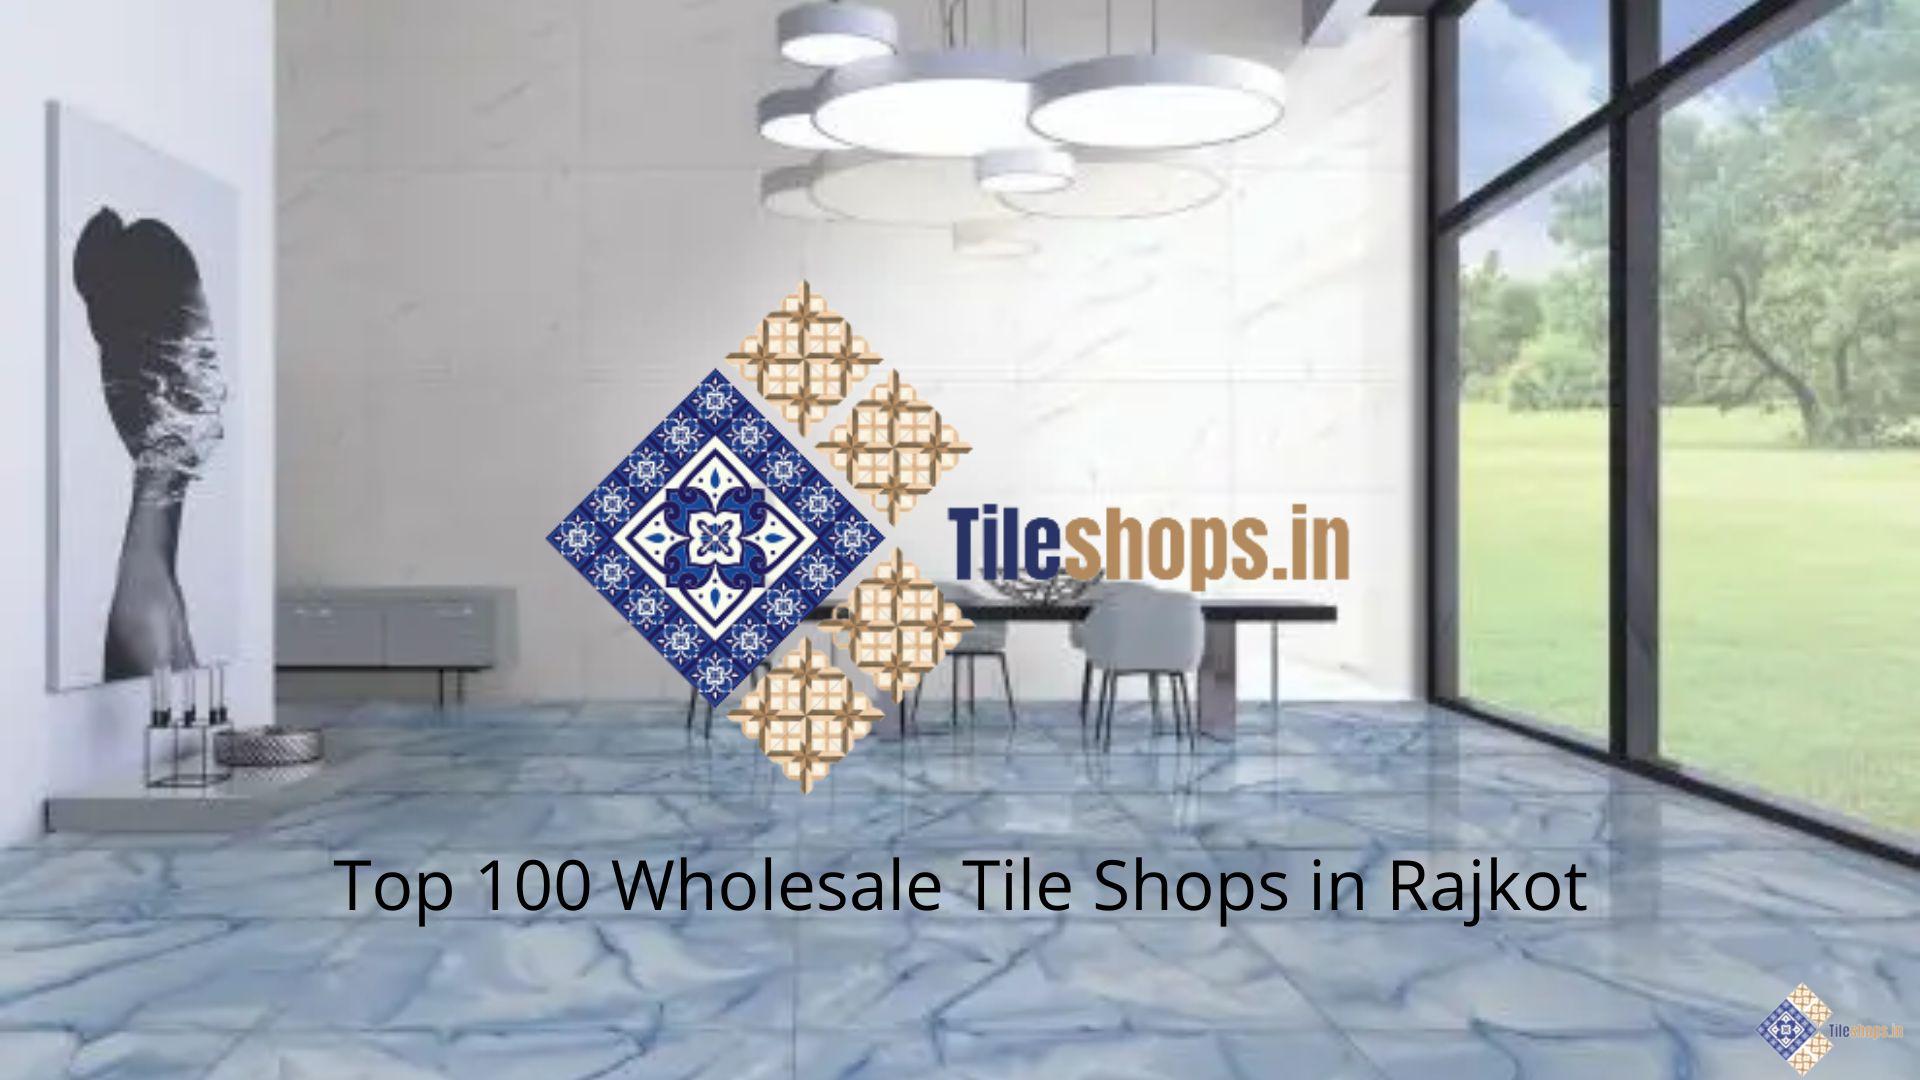 Top 100 Wholesale Tile Shops in Rajkot